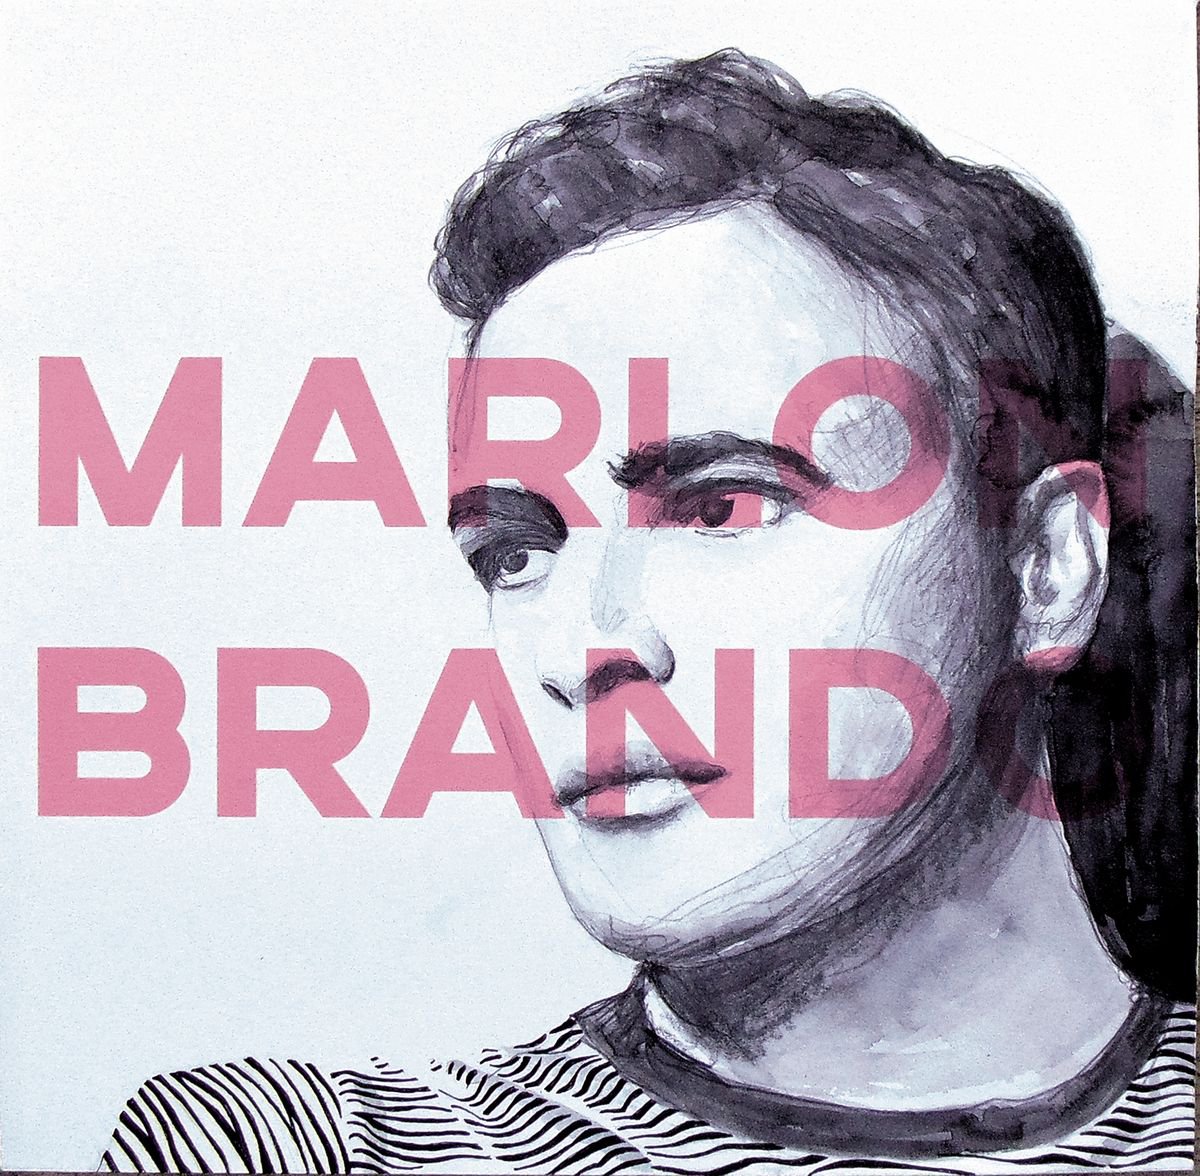 Marlon_Brando by Manel Villalonga